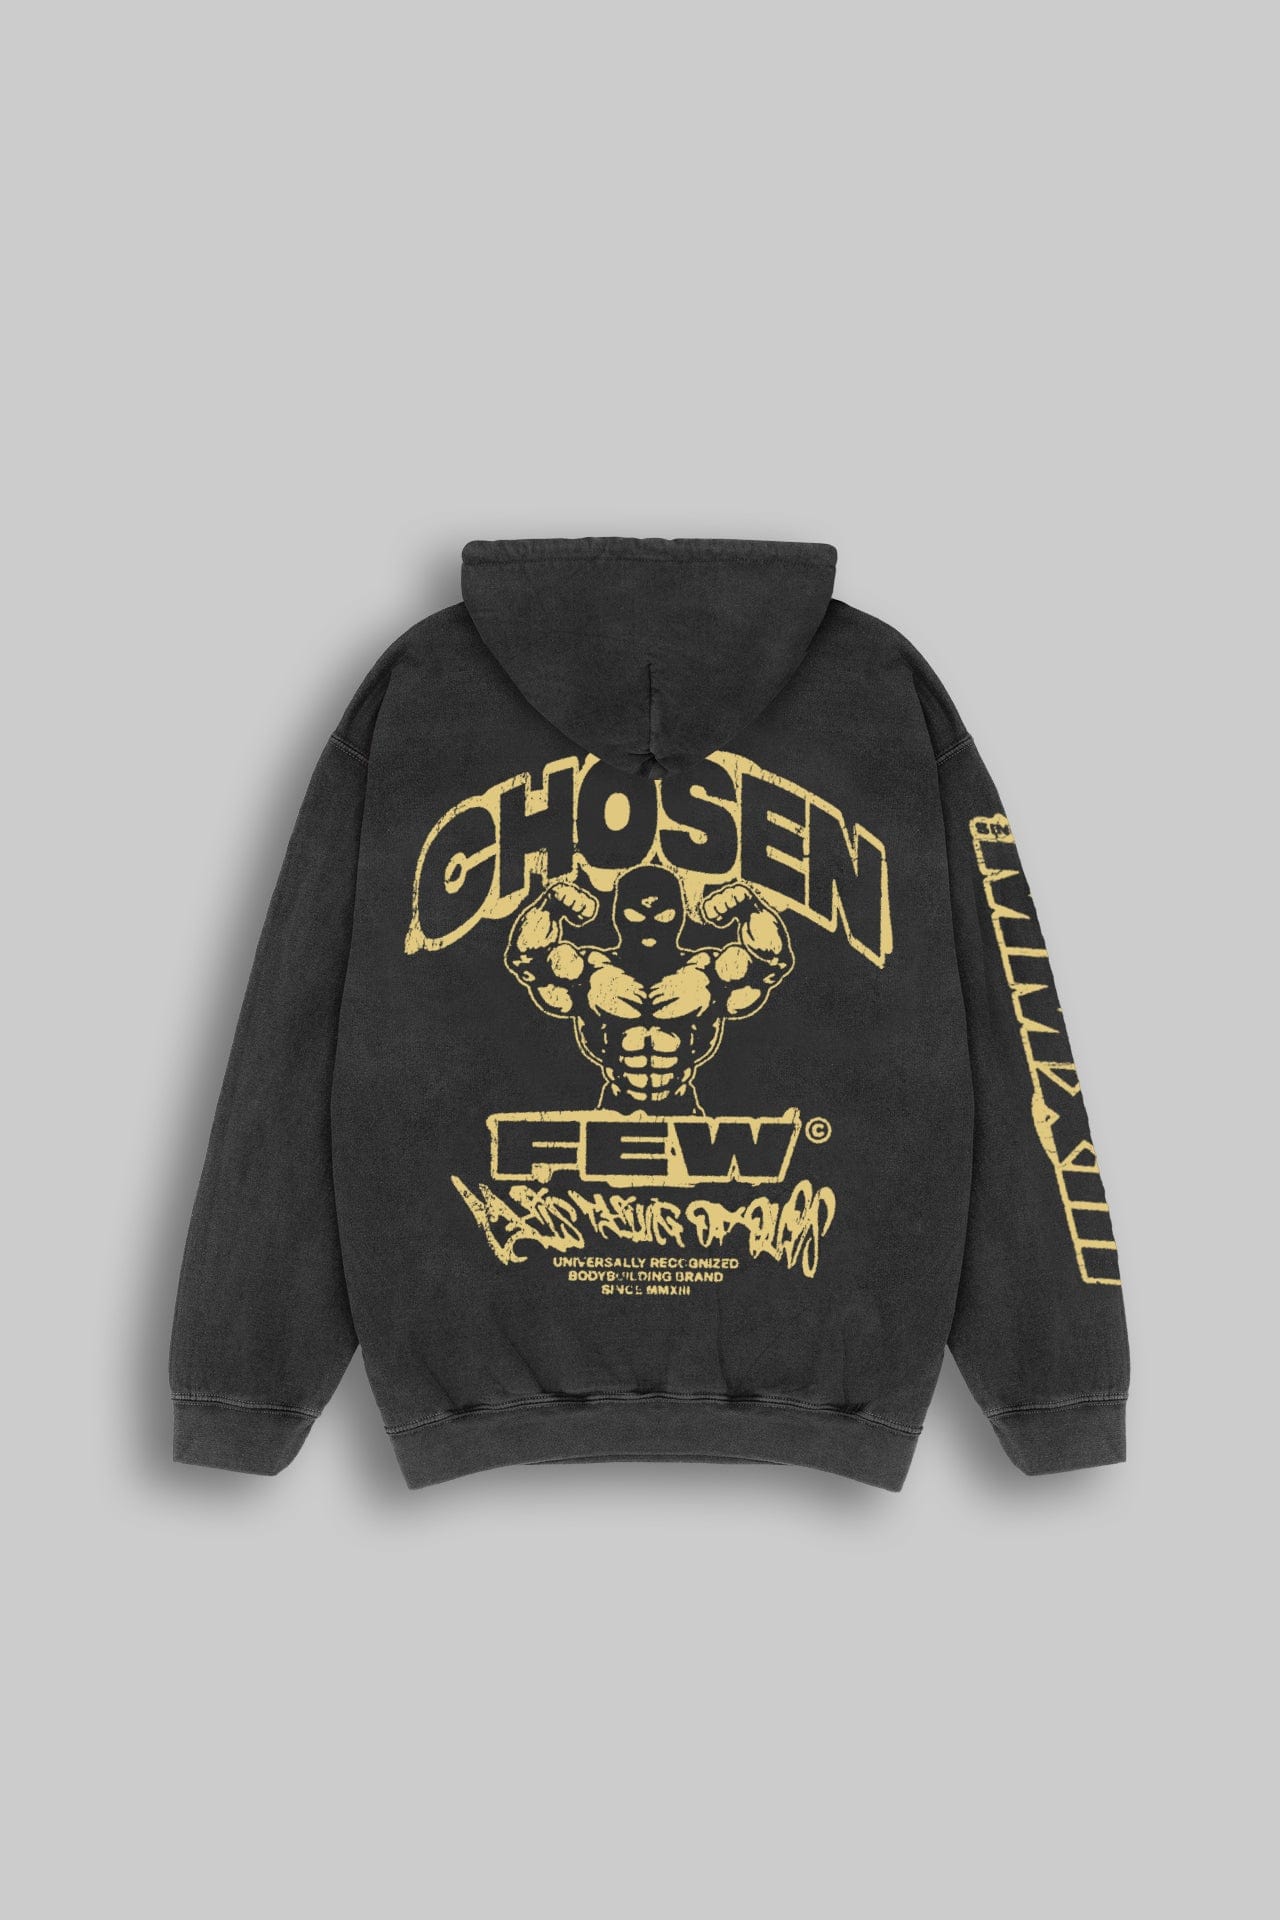 G Gym Street Edition Hoodie Retro Charcoal Black & Gold